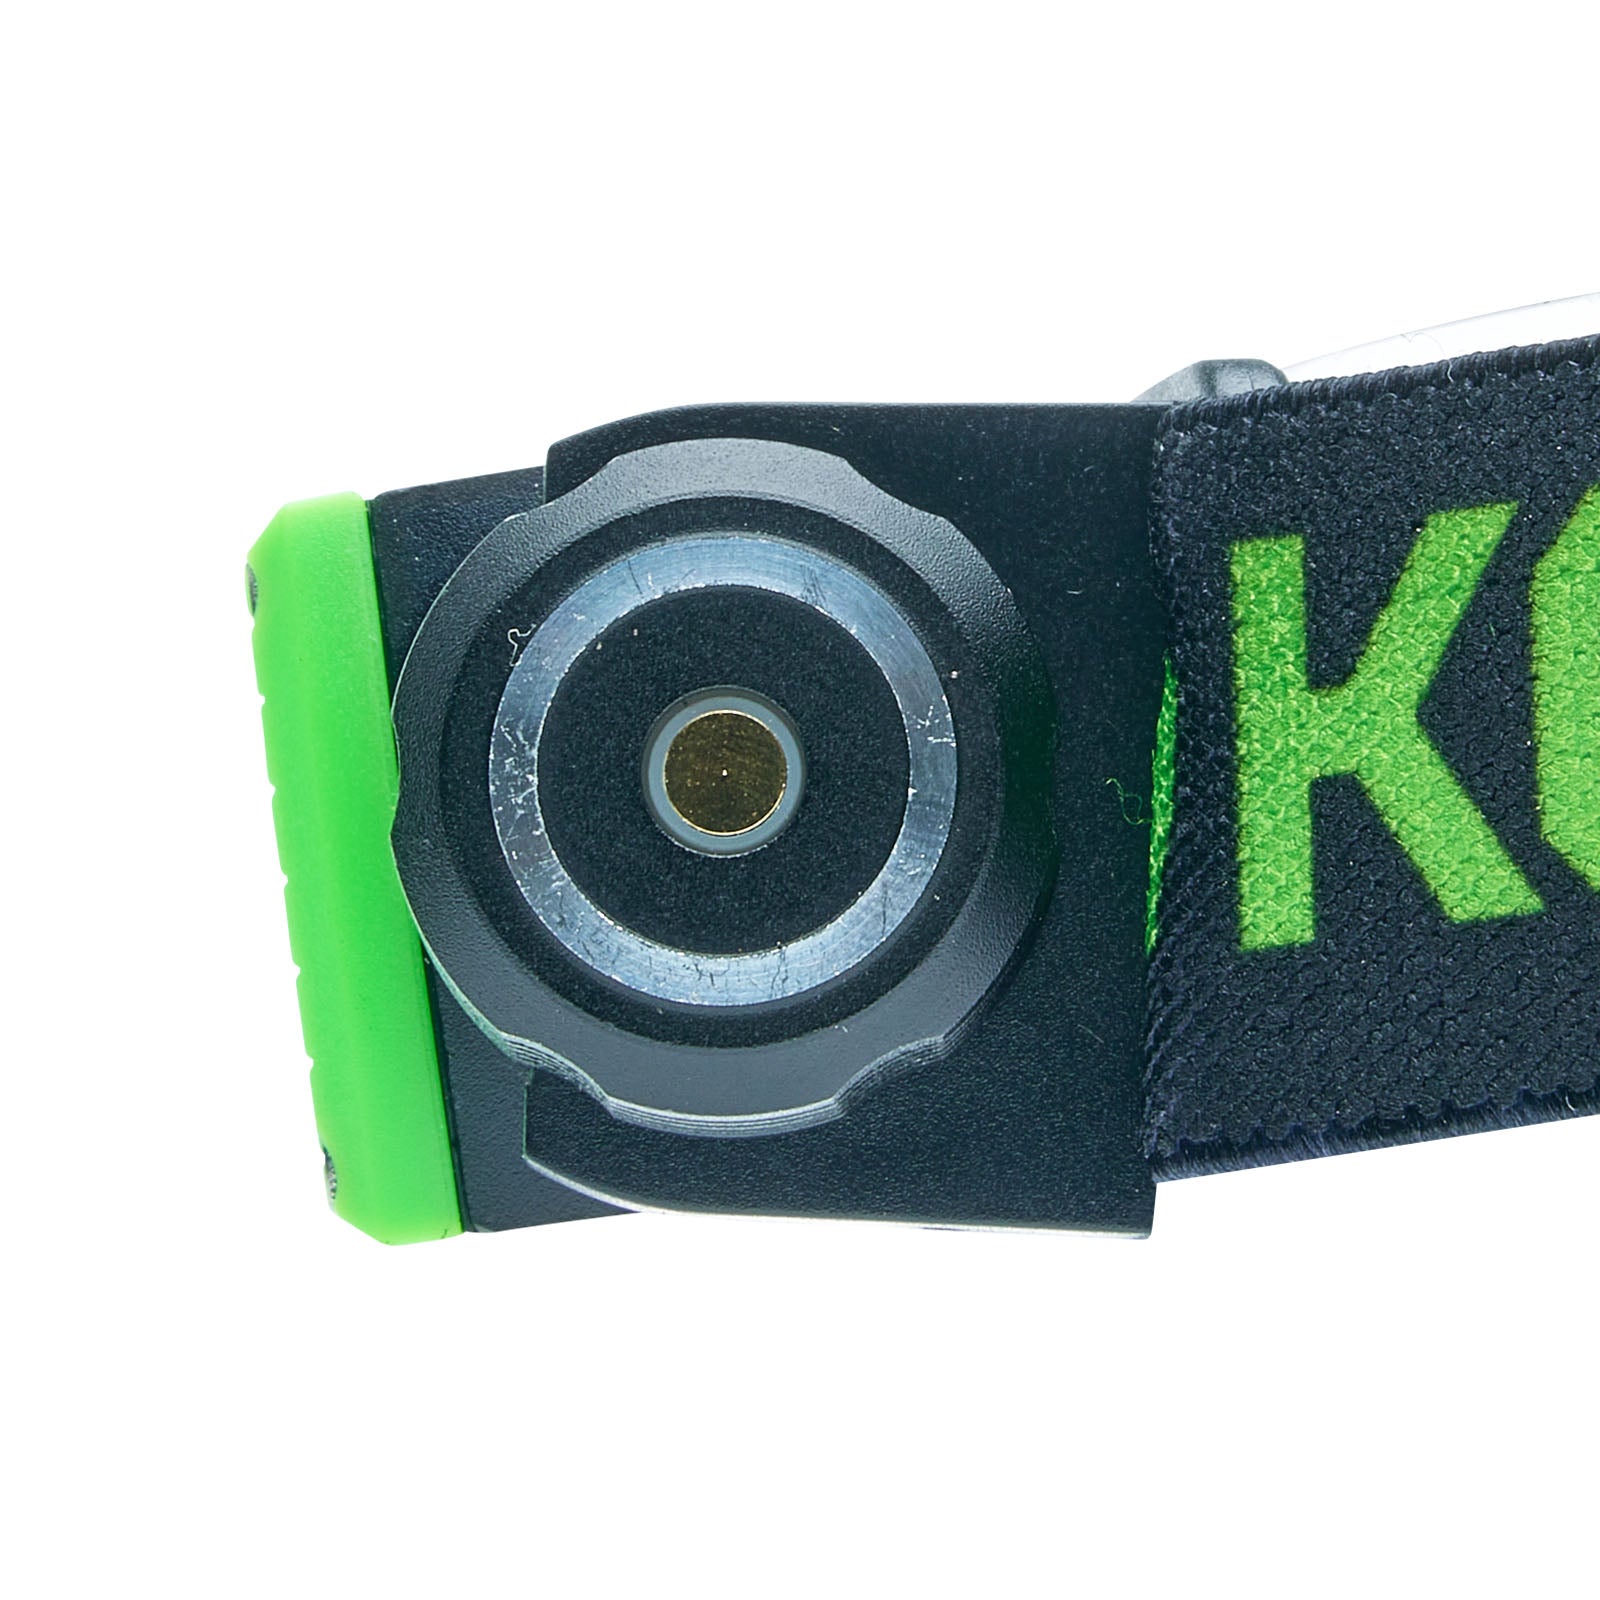 Kodiak® Konvert 1000 Lumen Rechargeable Headlamp with Magnetic Charging